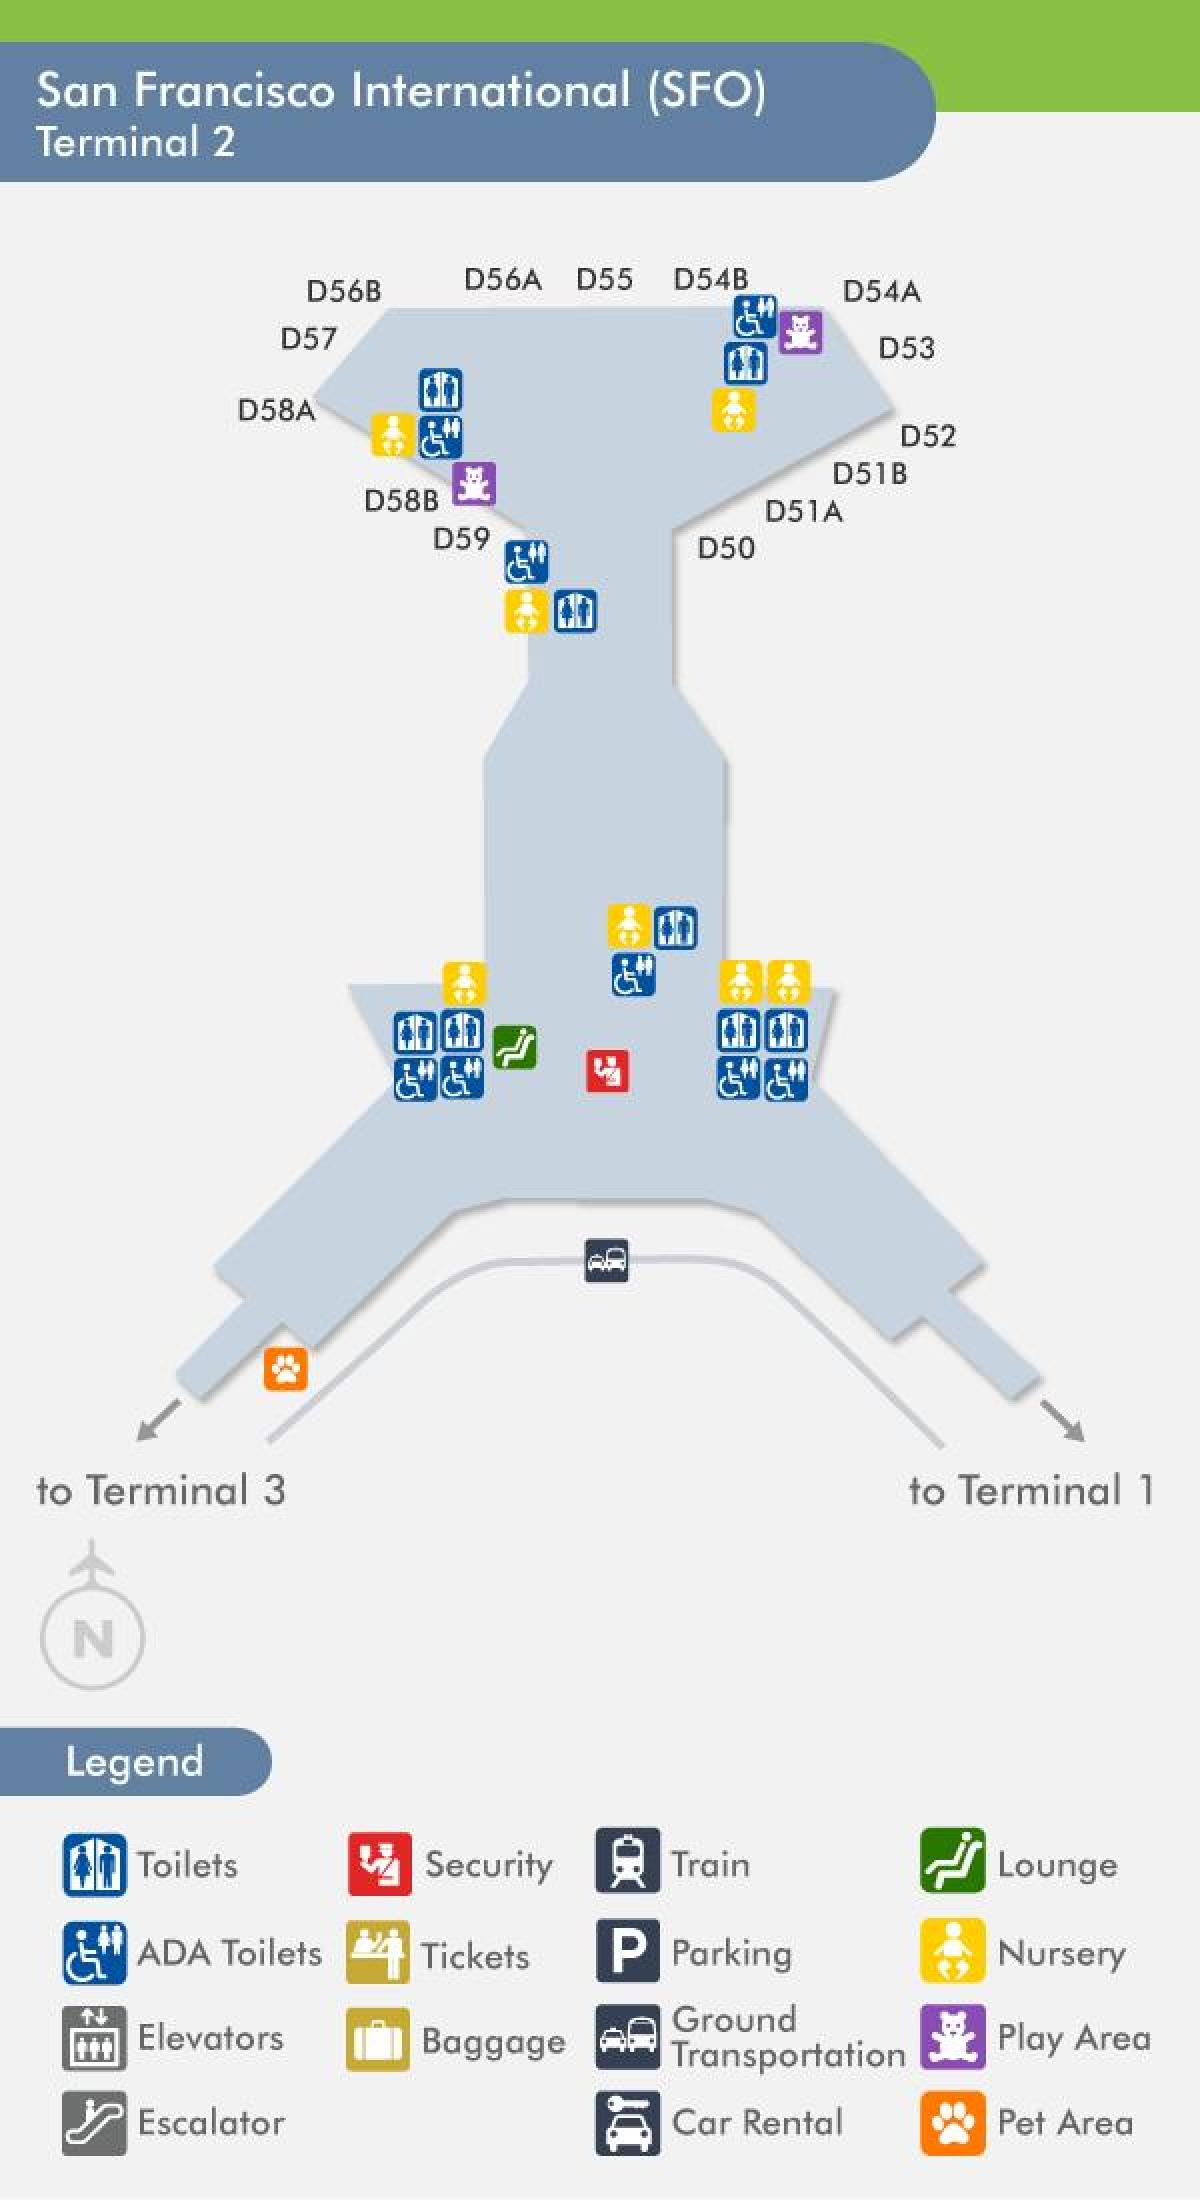 San Francisco airport terminal 2 del mapa